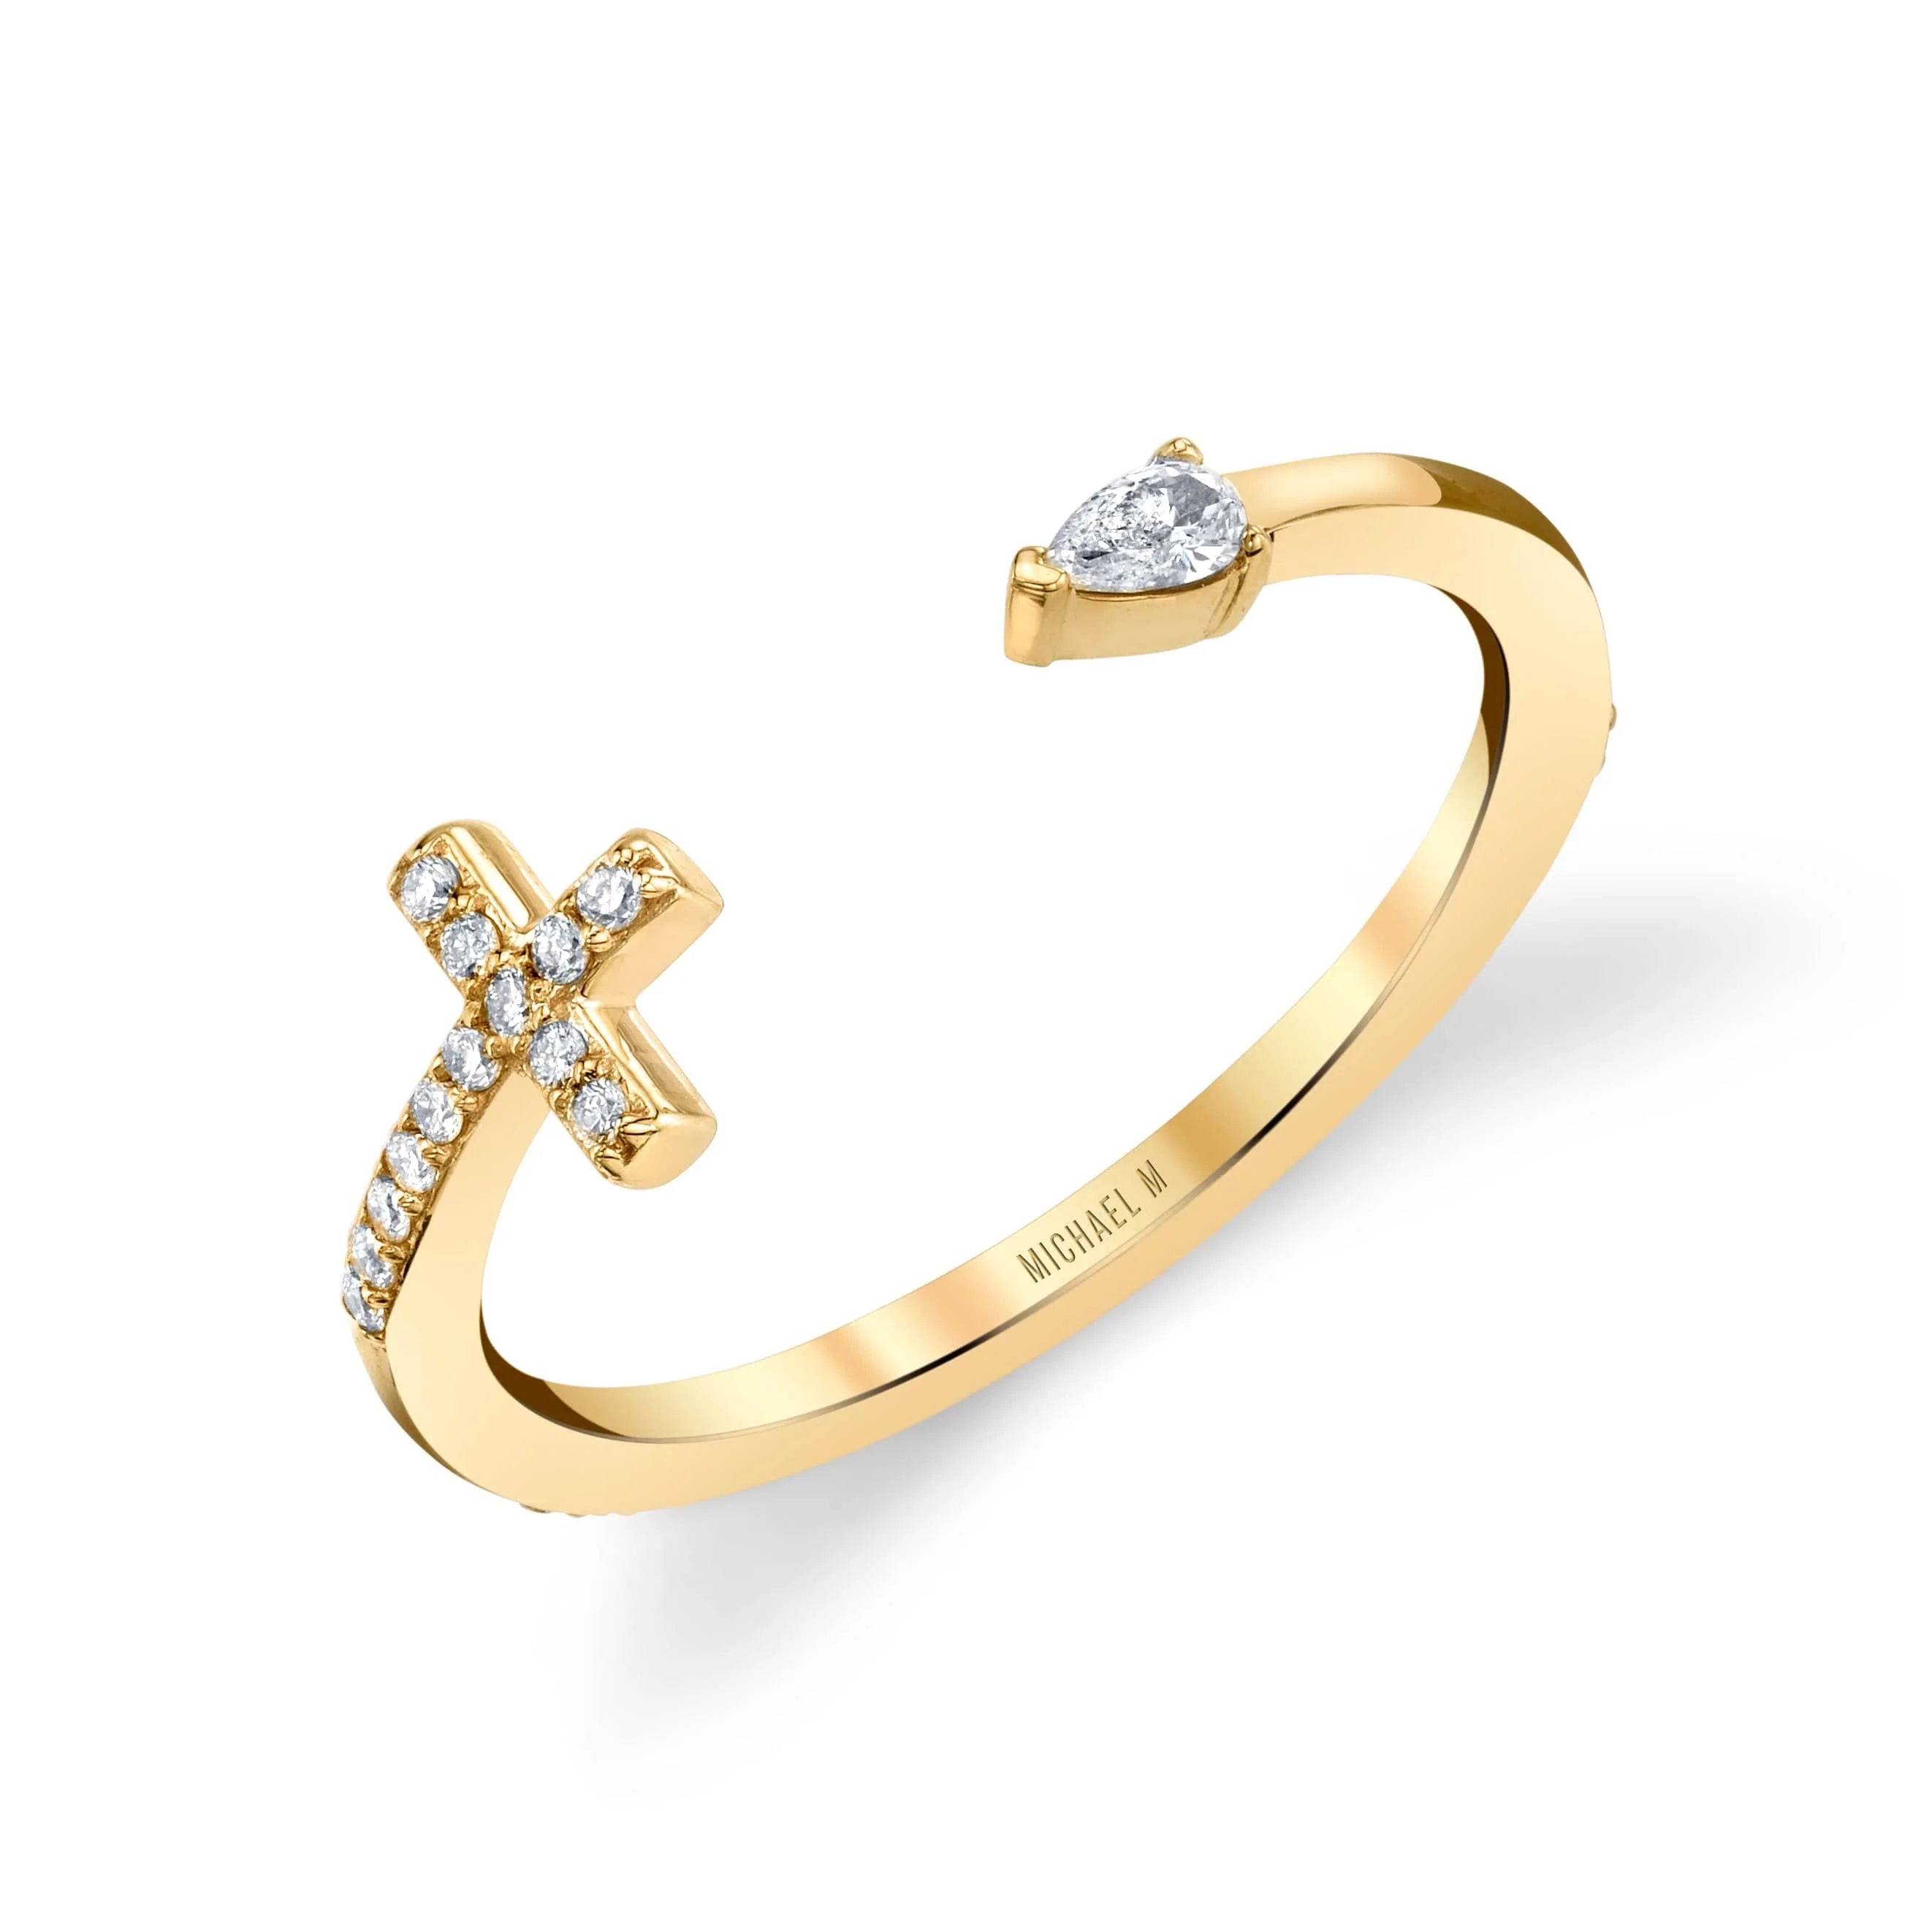 MICHAEL M Fashion Rings 14K Yellow Gold / 4 Cross and Teardrop Diamond Ring F322-YG4